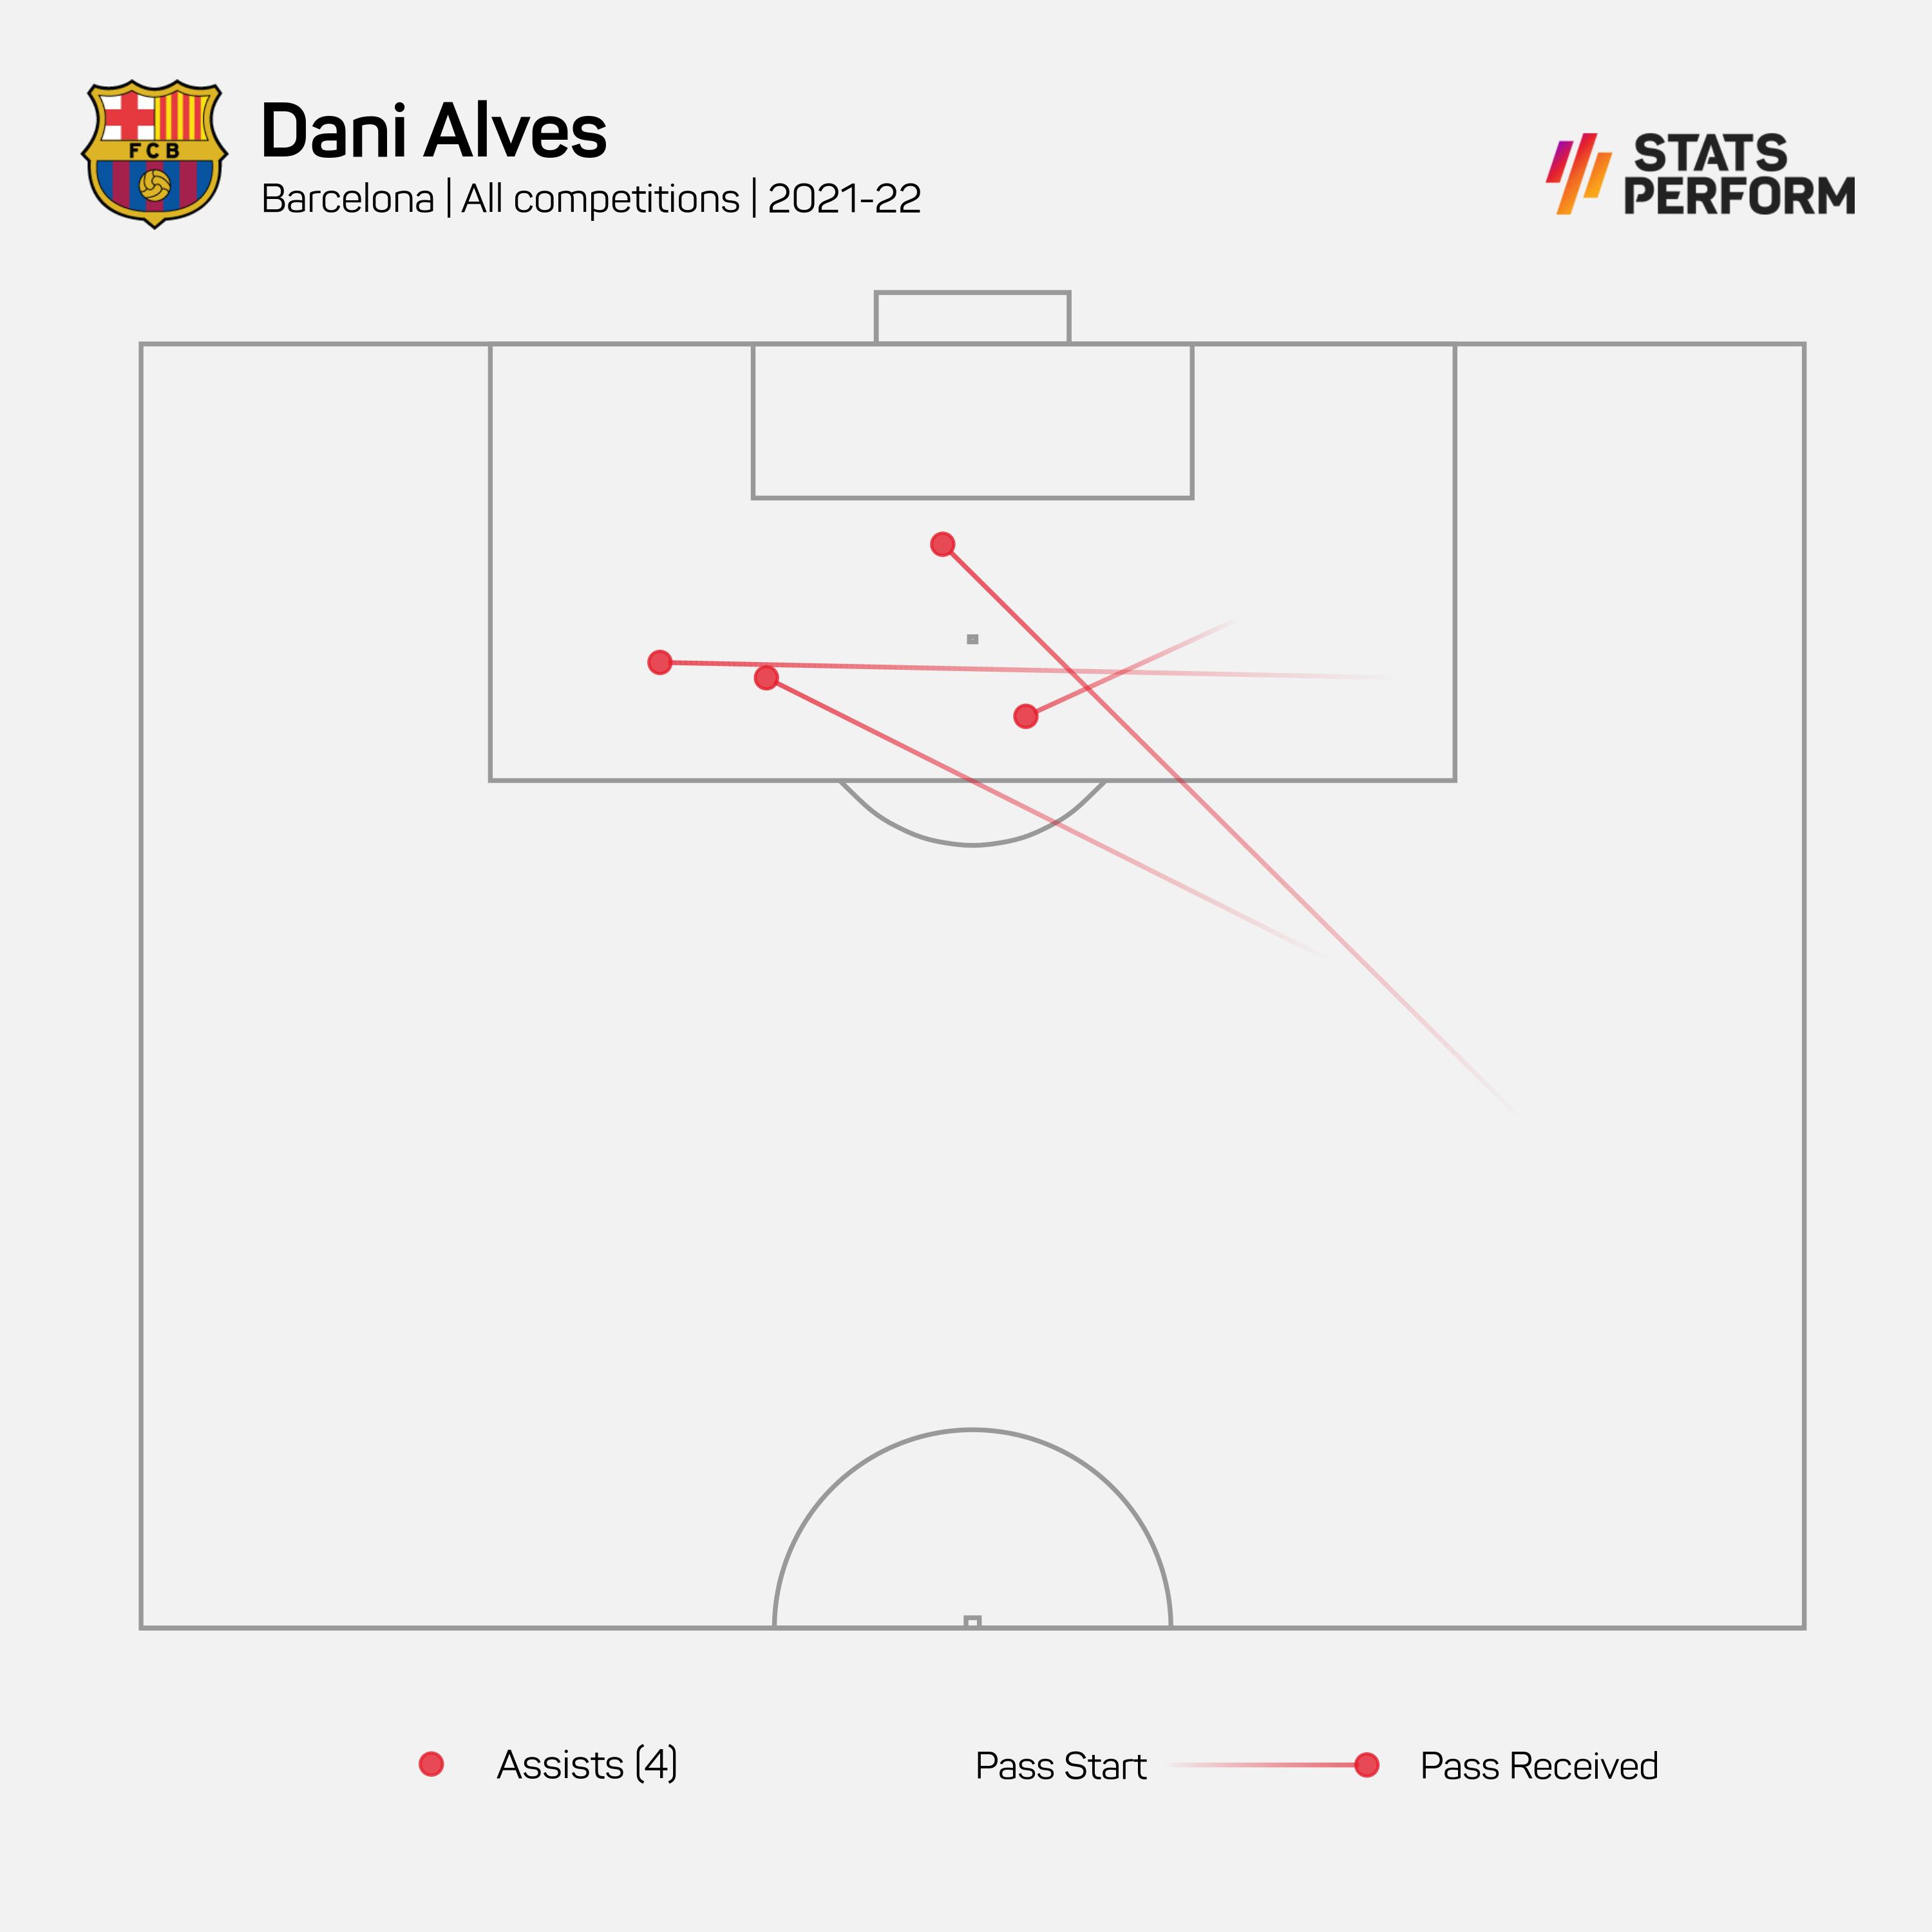 Dani Alves assisted four goals last season